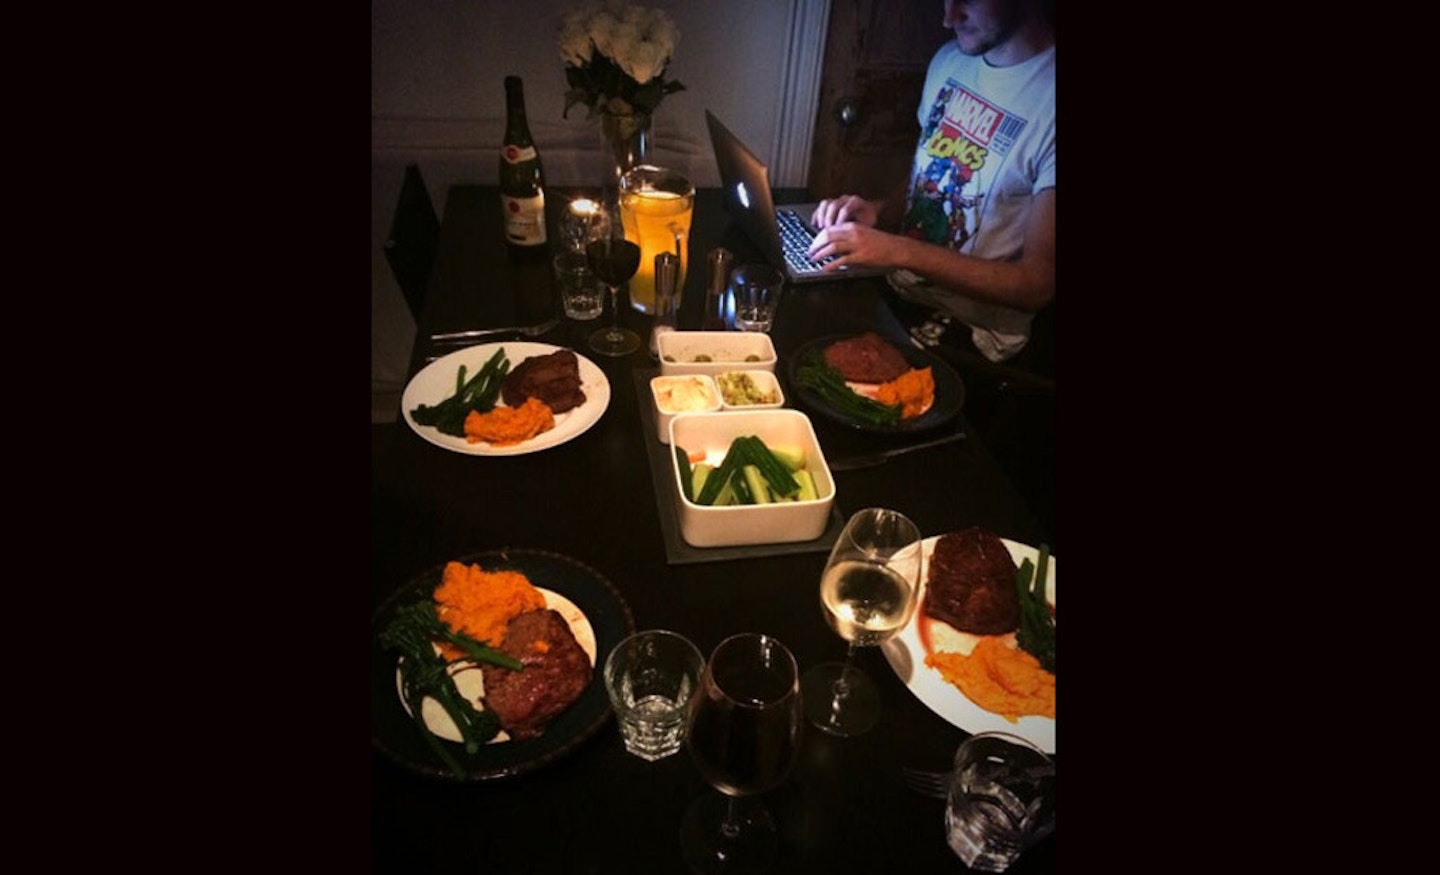 I cooked dinner for @JimsTweetings @MarcusButlerTv & @niomismart this evening! Steaks, sweet potato & broccoli.